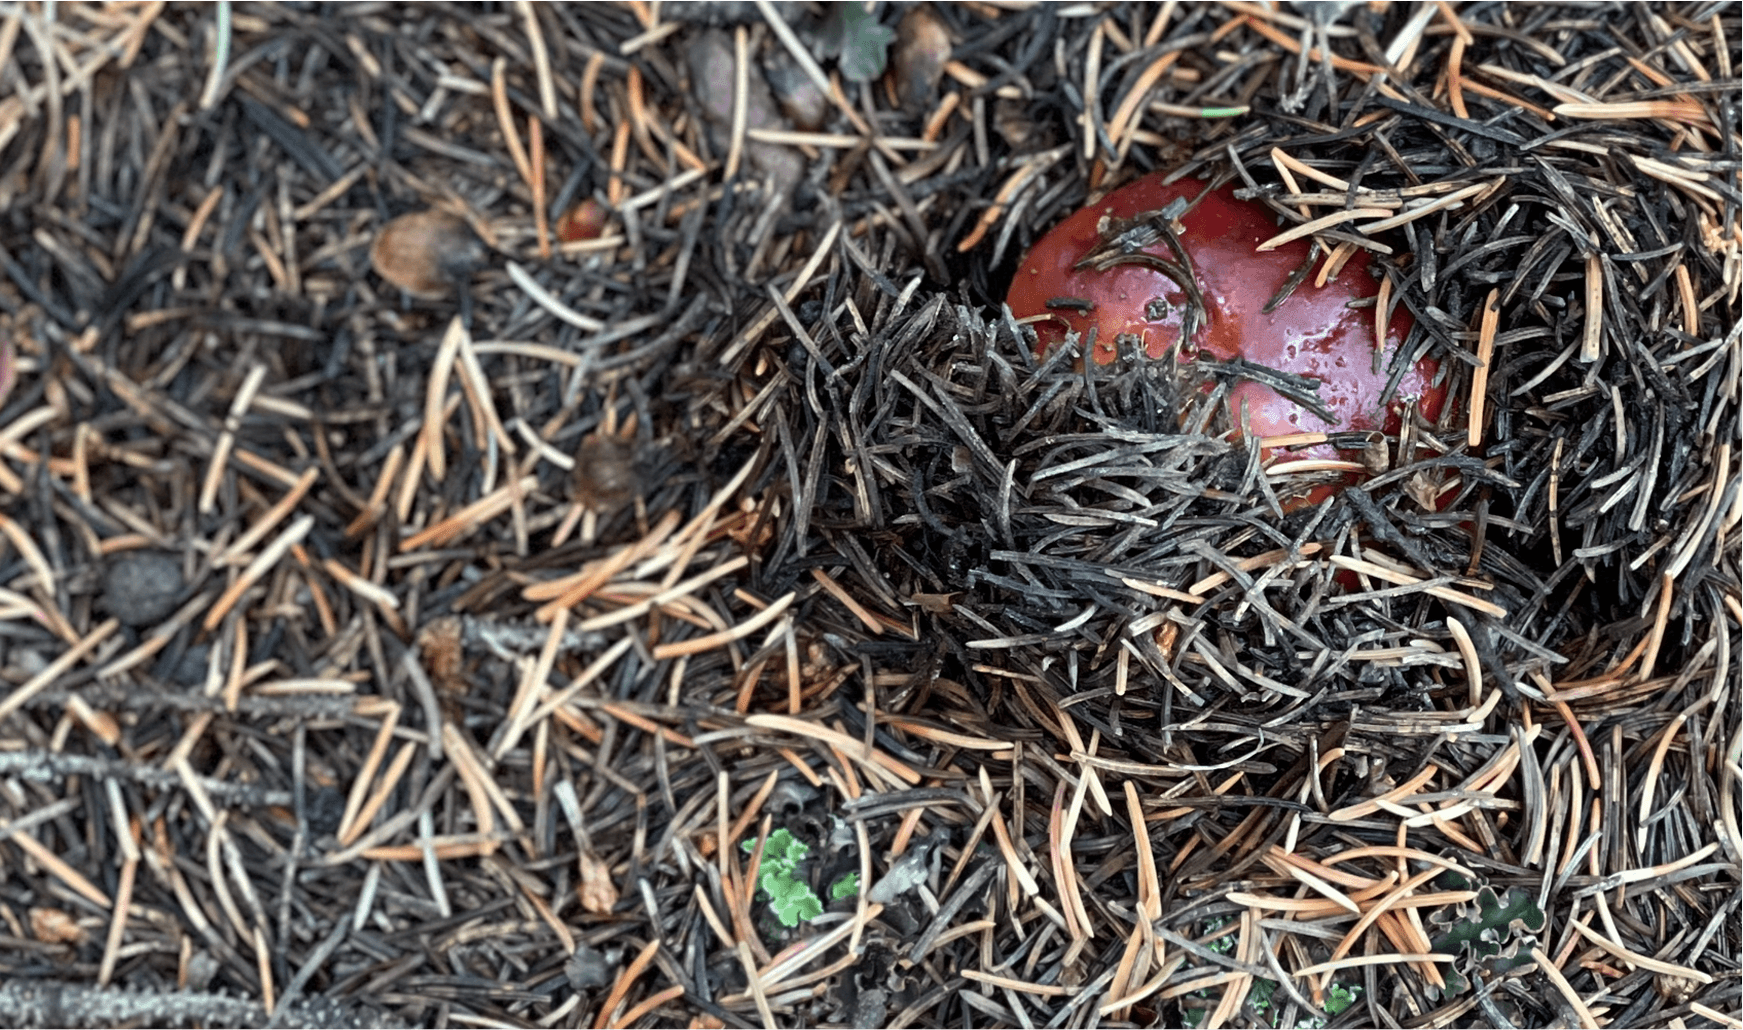 shroom nest